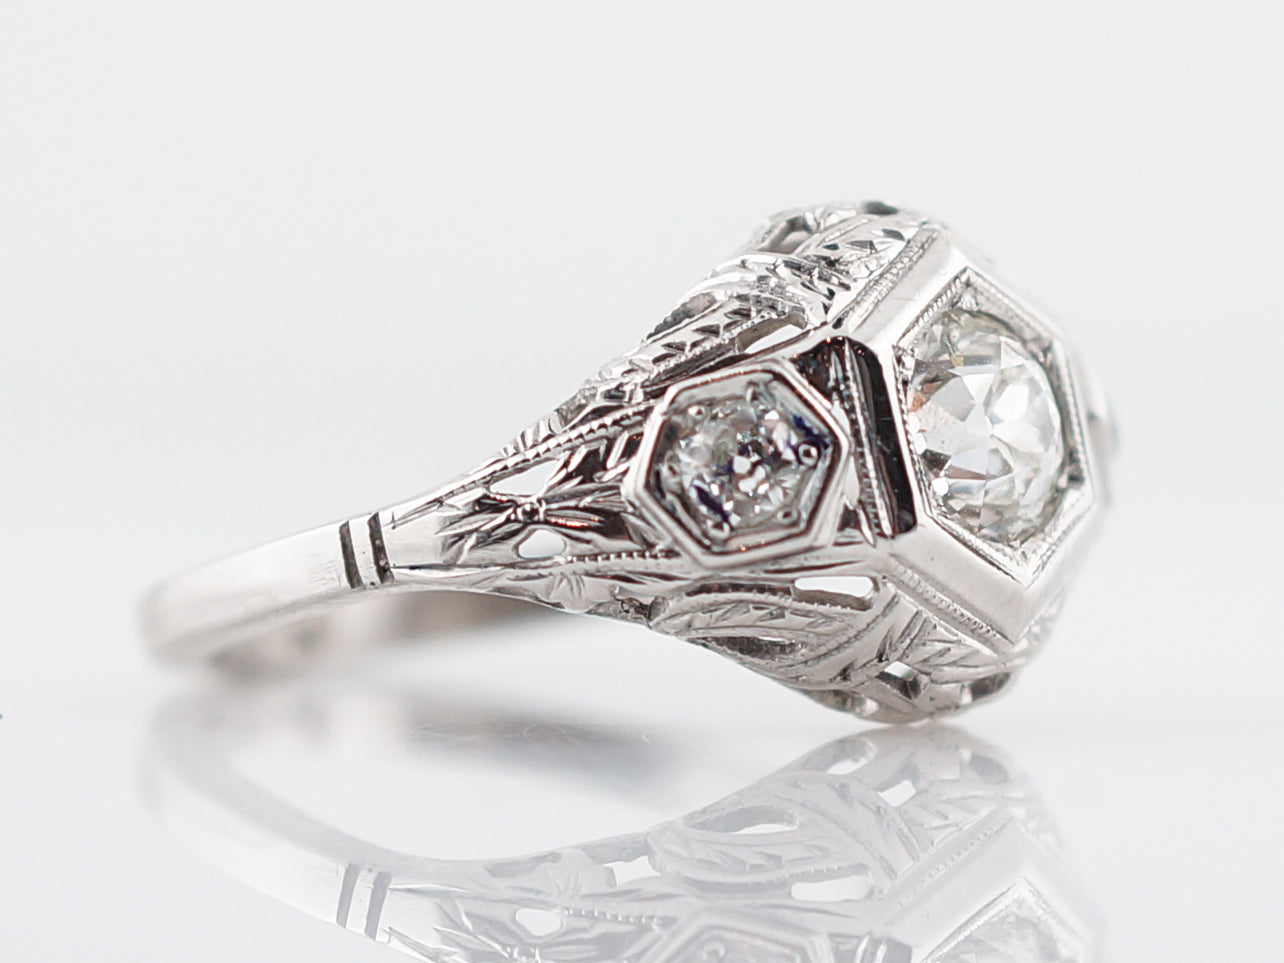 Ornate Filigree Engagement Ring Old European Cut Diamond